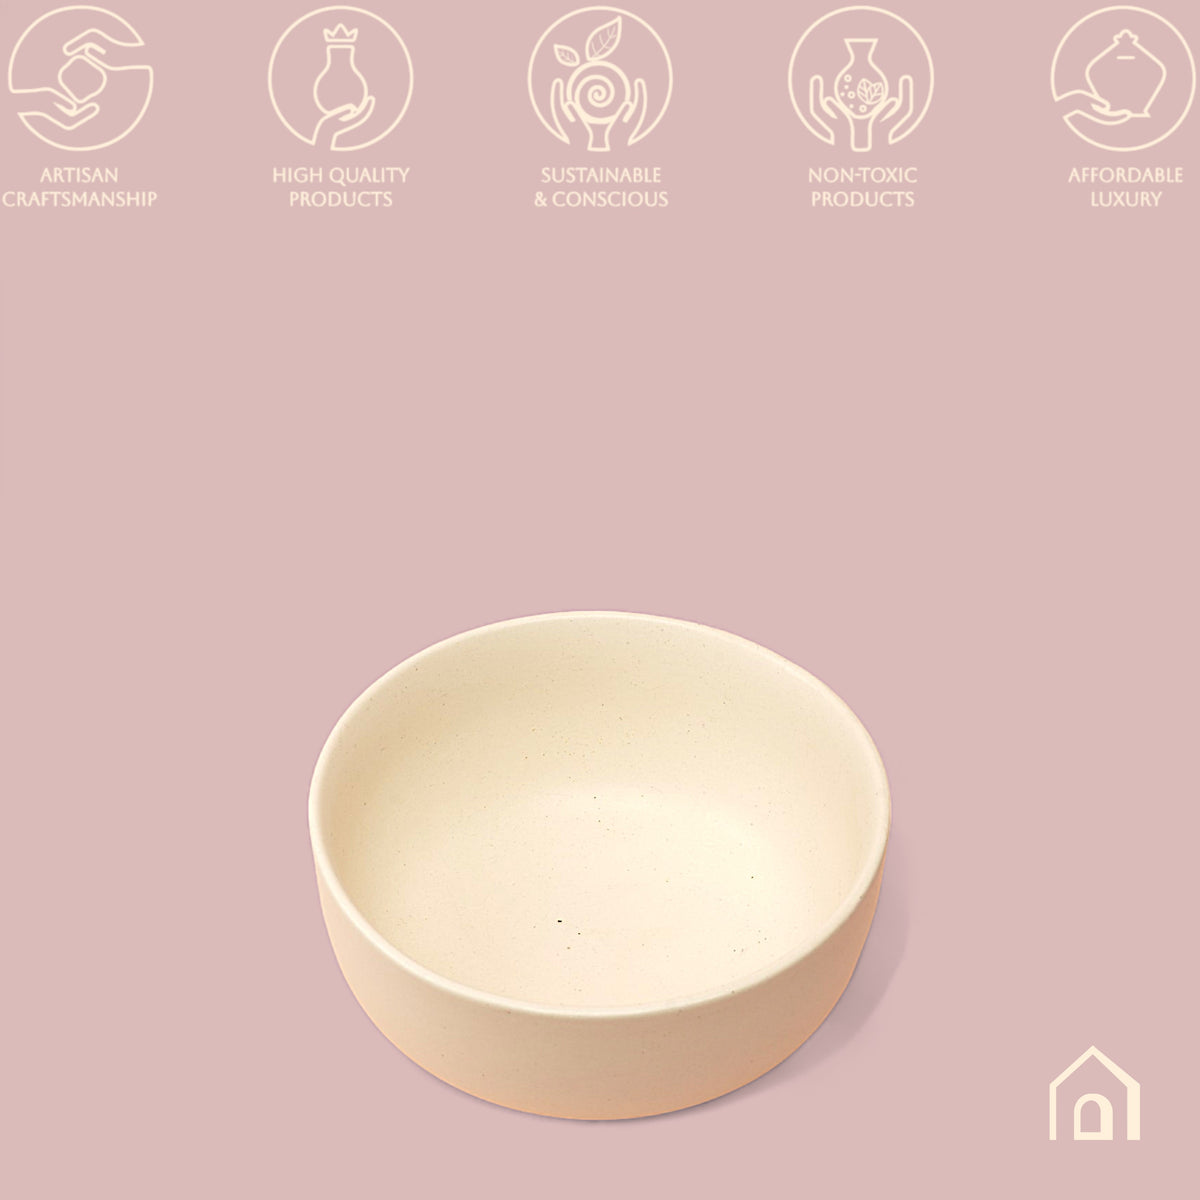 Minimalist Cream Ceramic Bowl: Contemporary Kitchen Essential for Stylish Dining